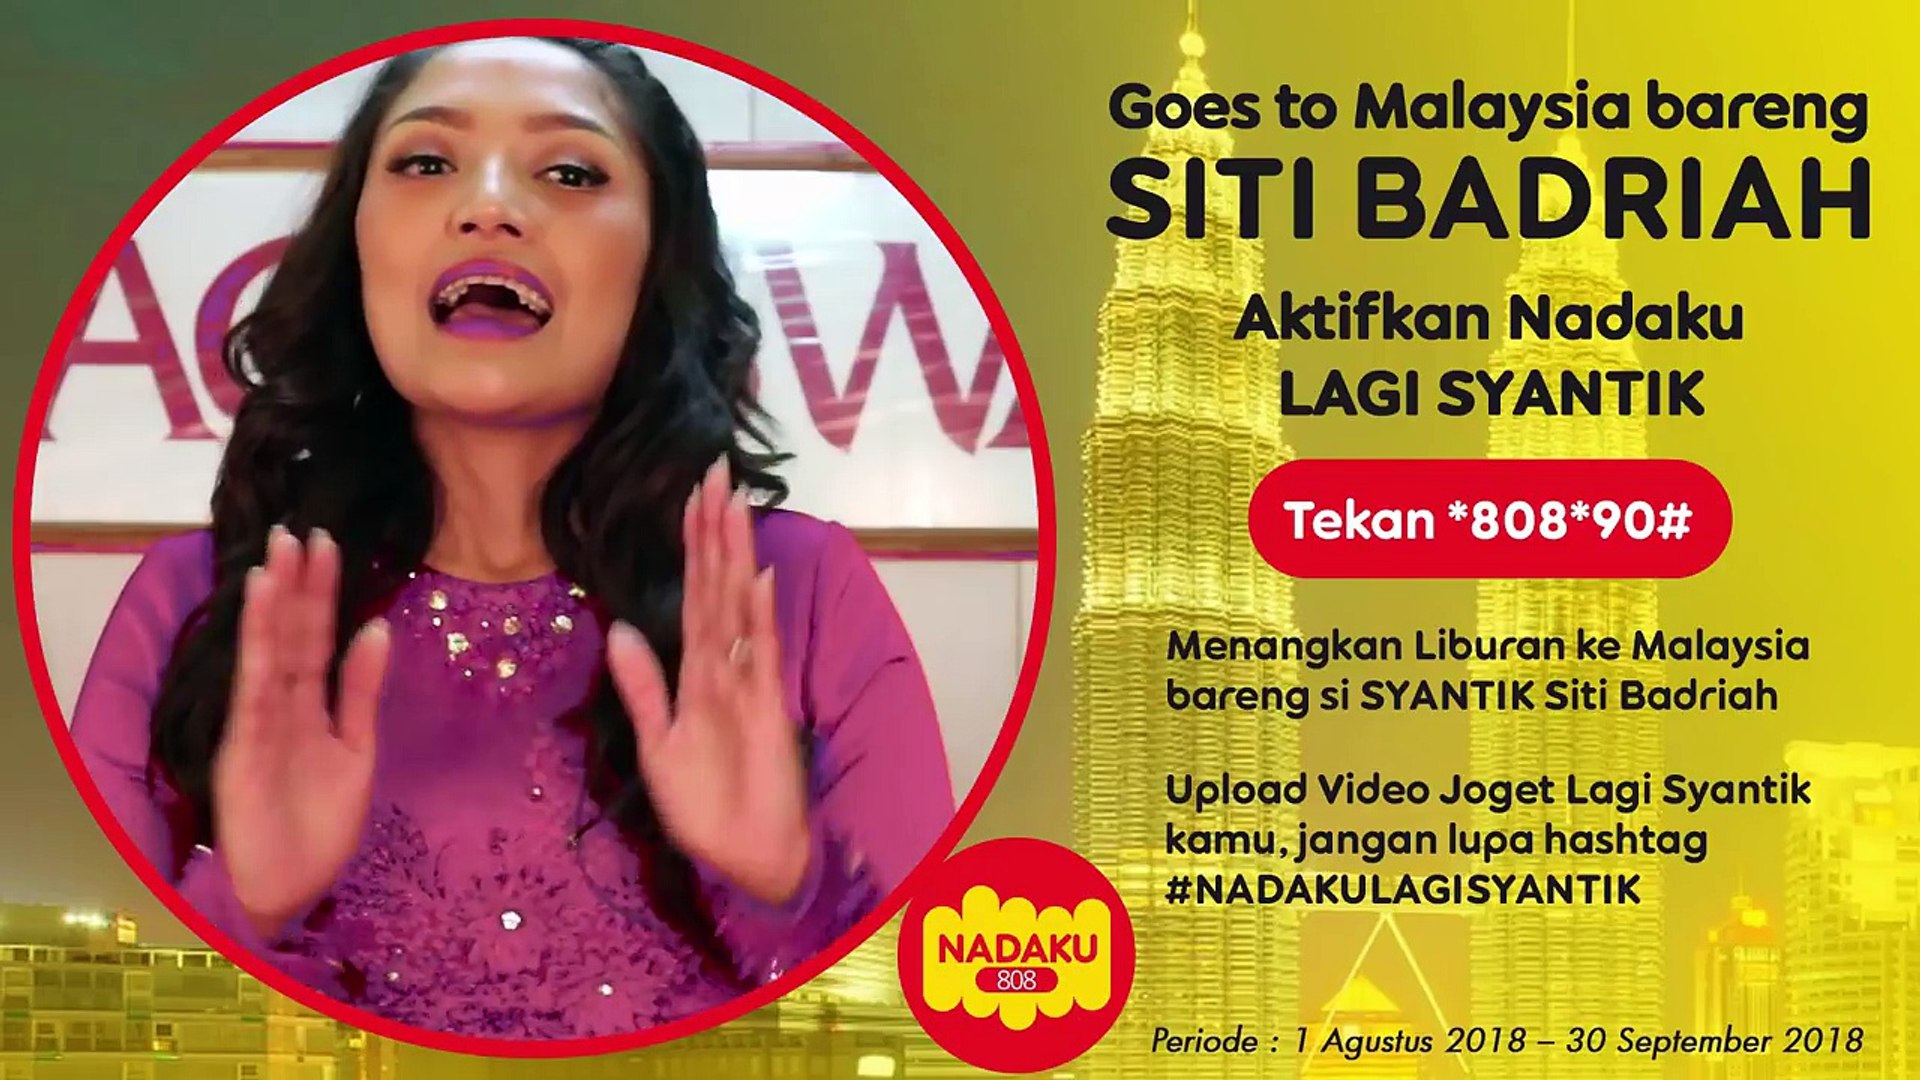 Goes To Malaysia Bareng Siti Badriah Nadakulagisyantik